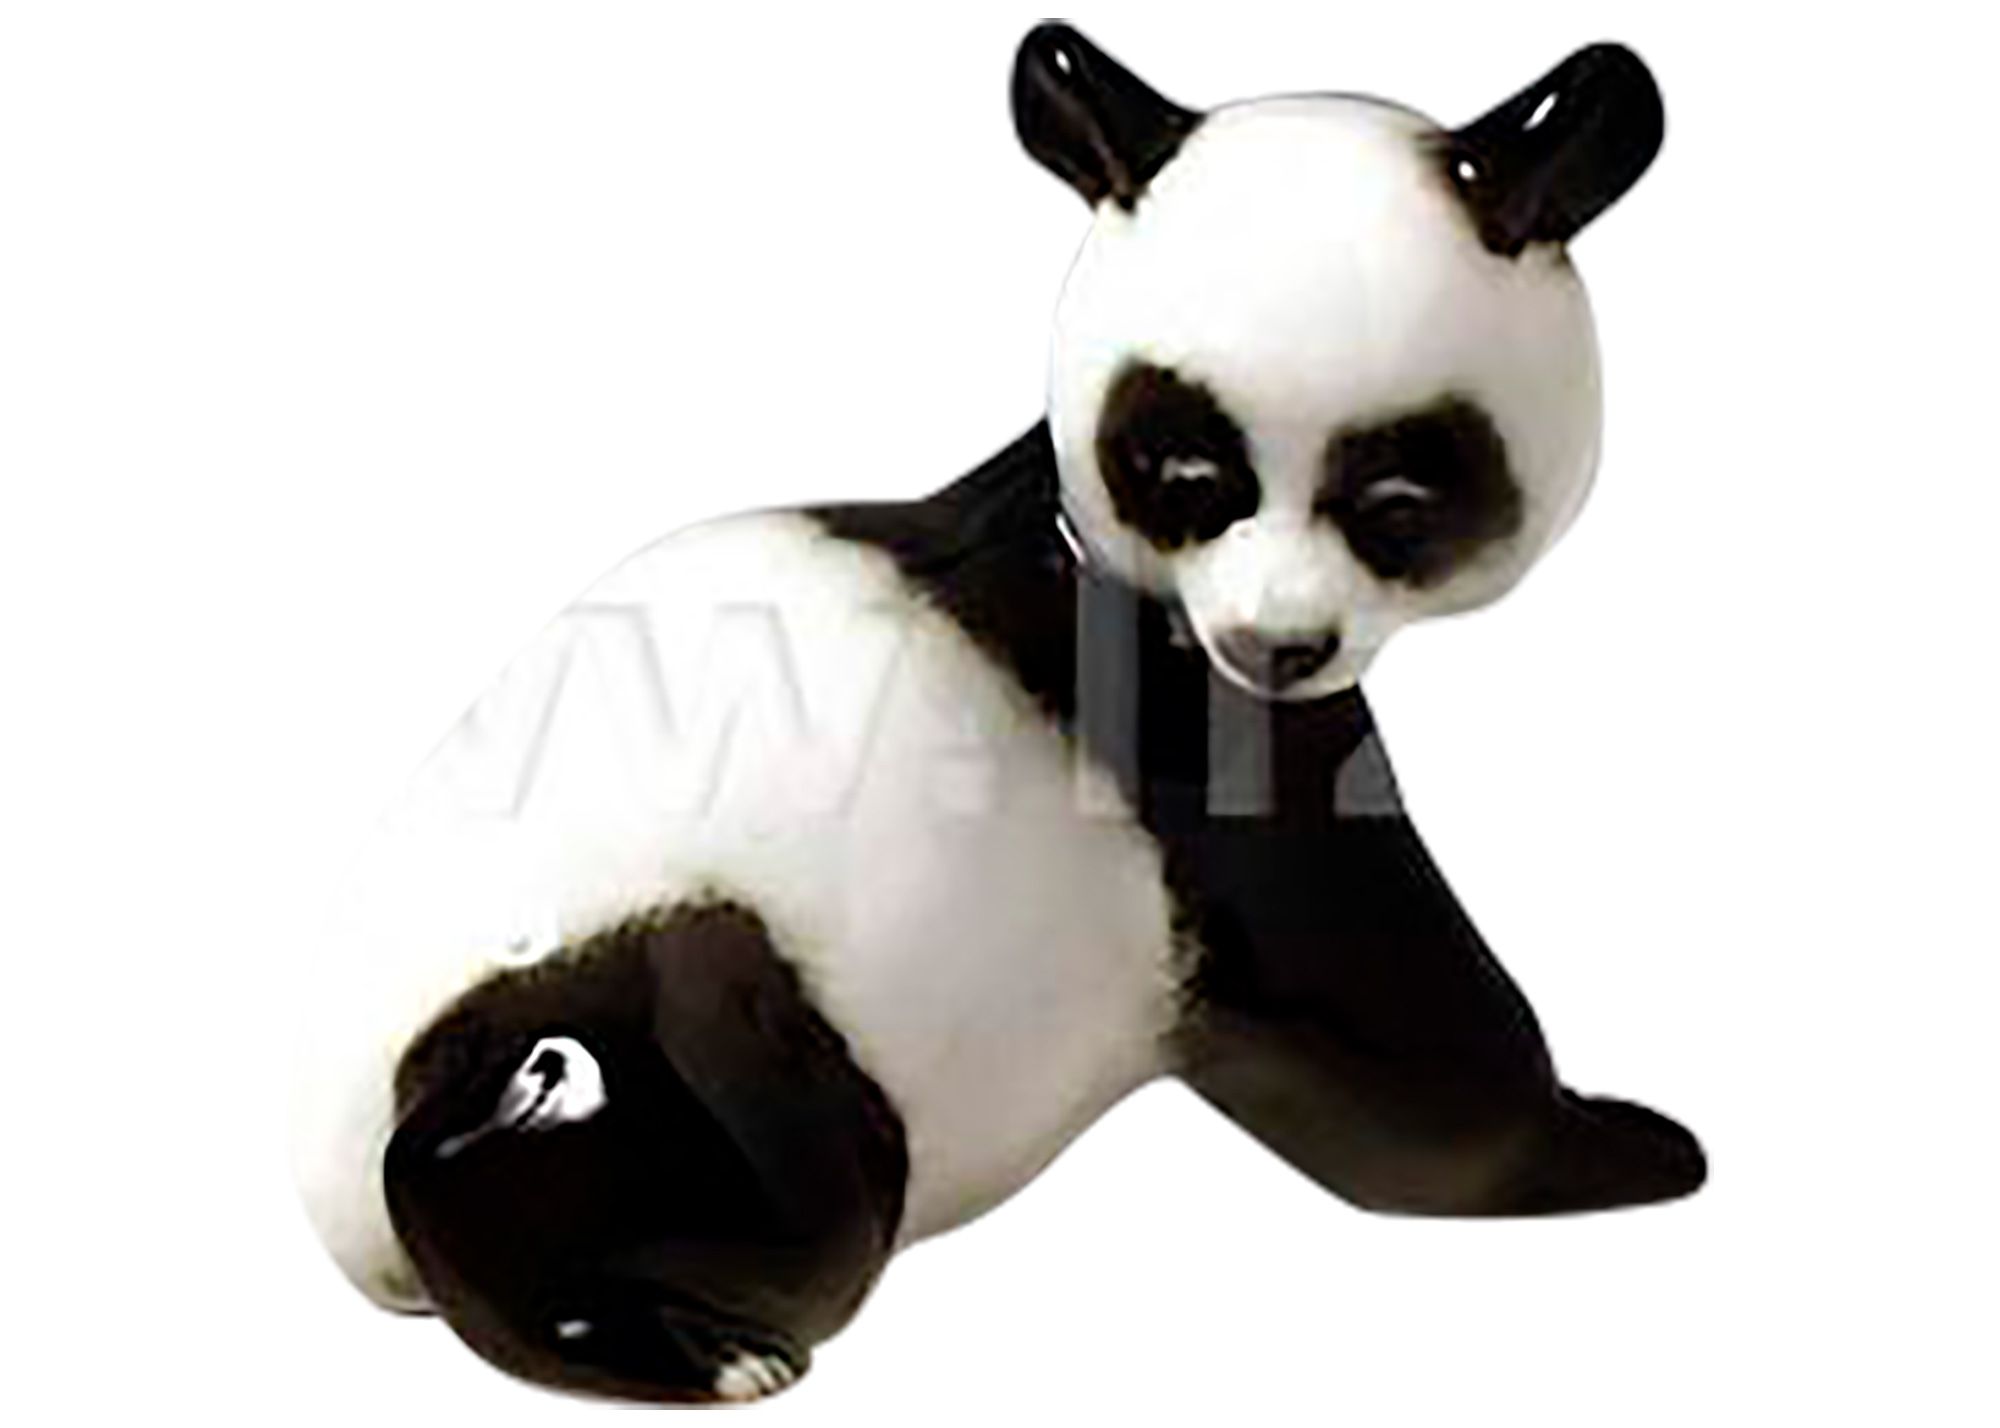 Buy Panda Bear Figurine at GoldenCockerel.com